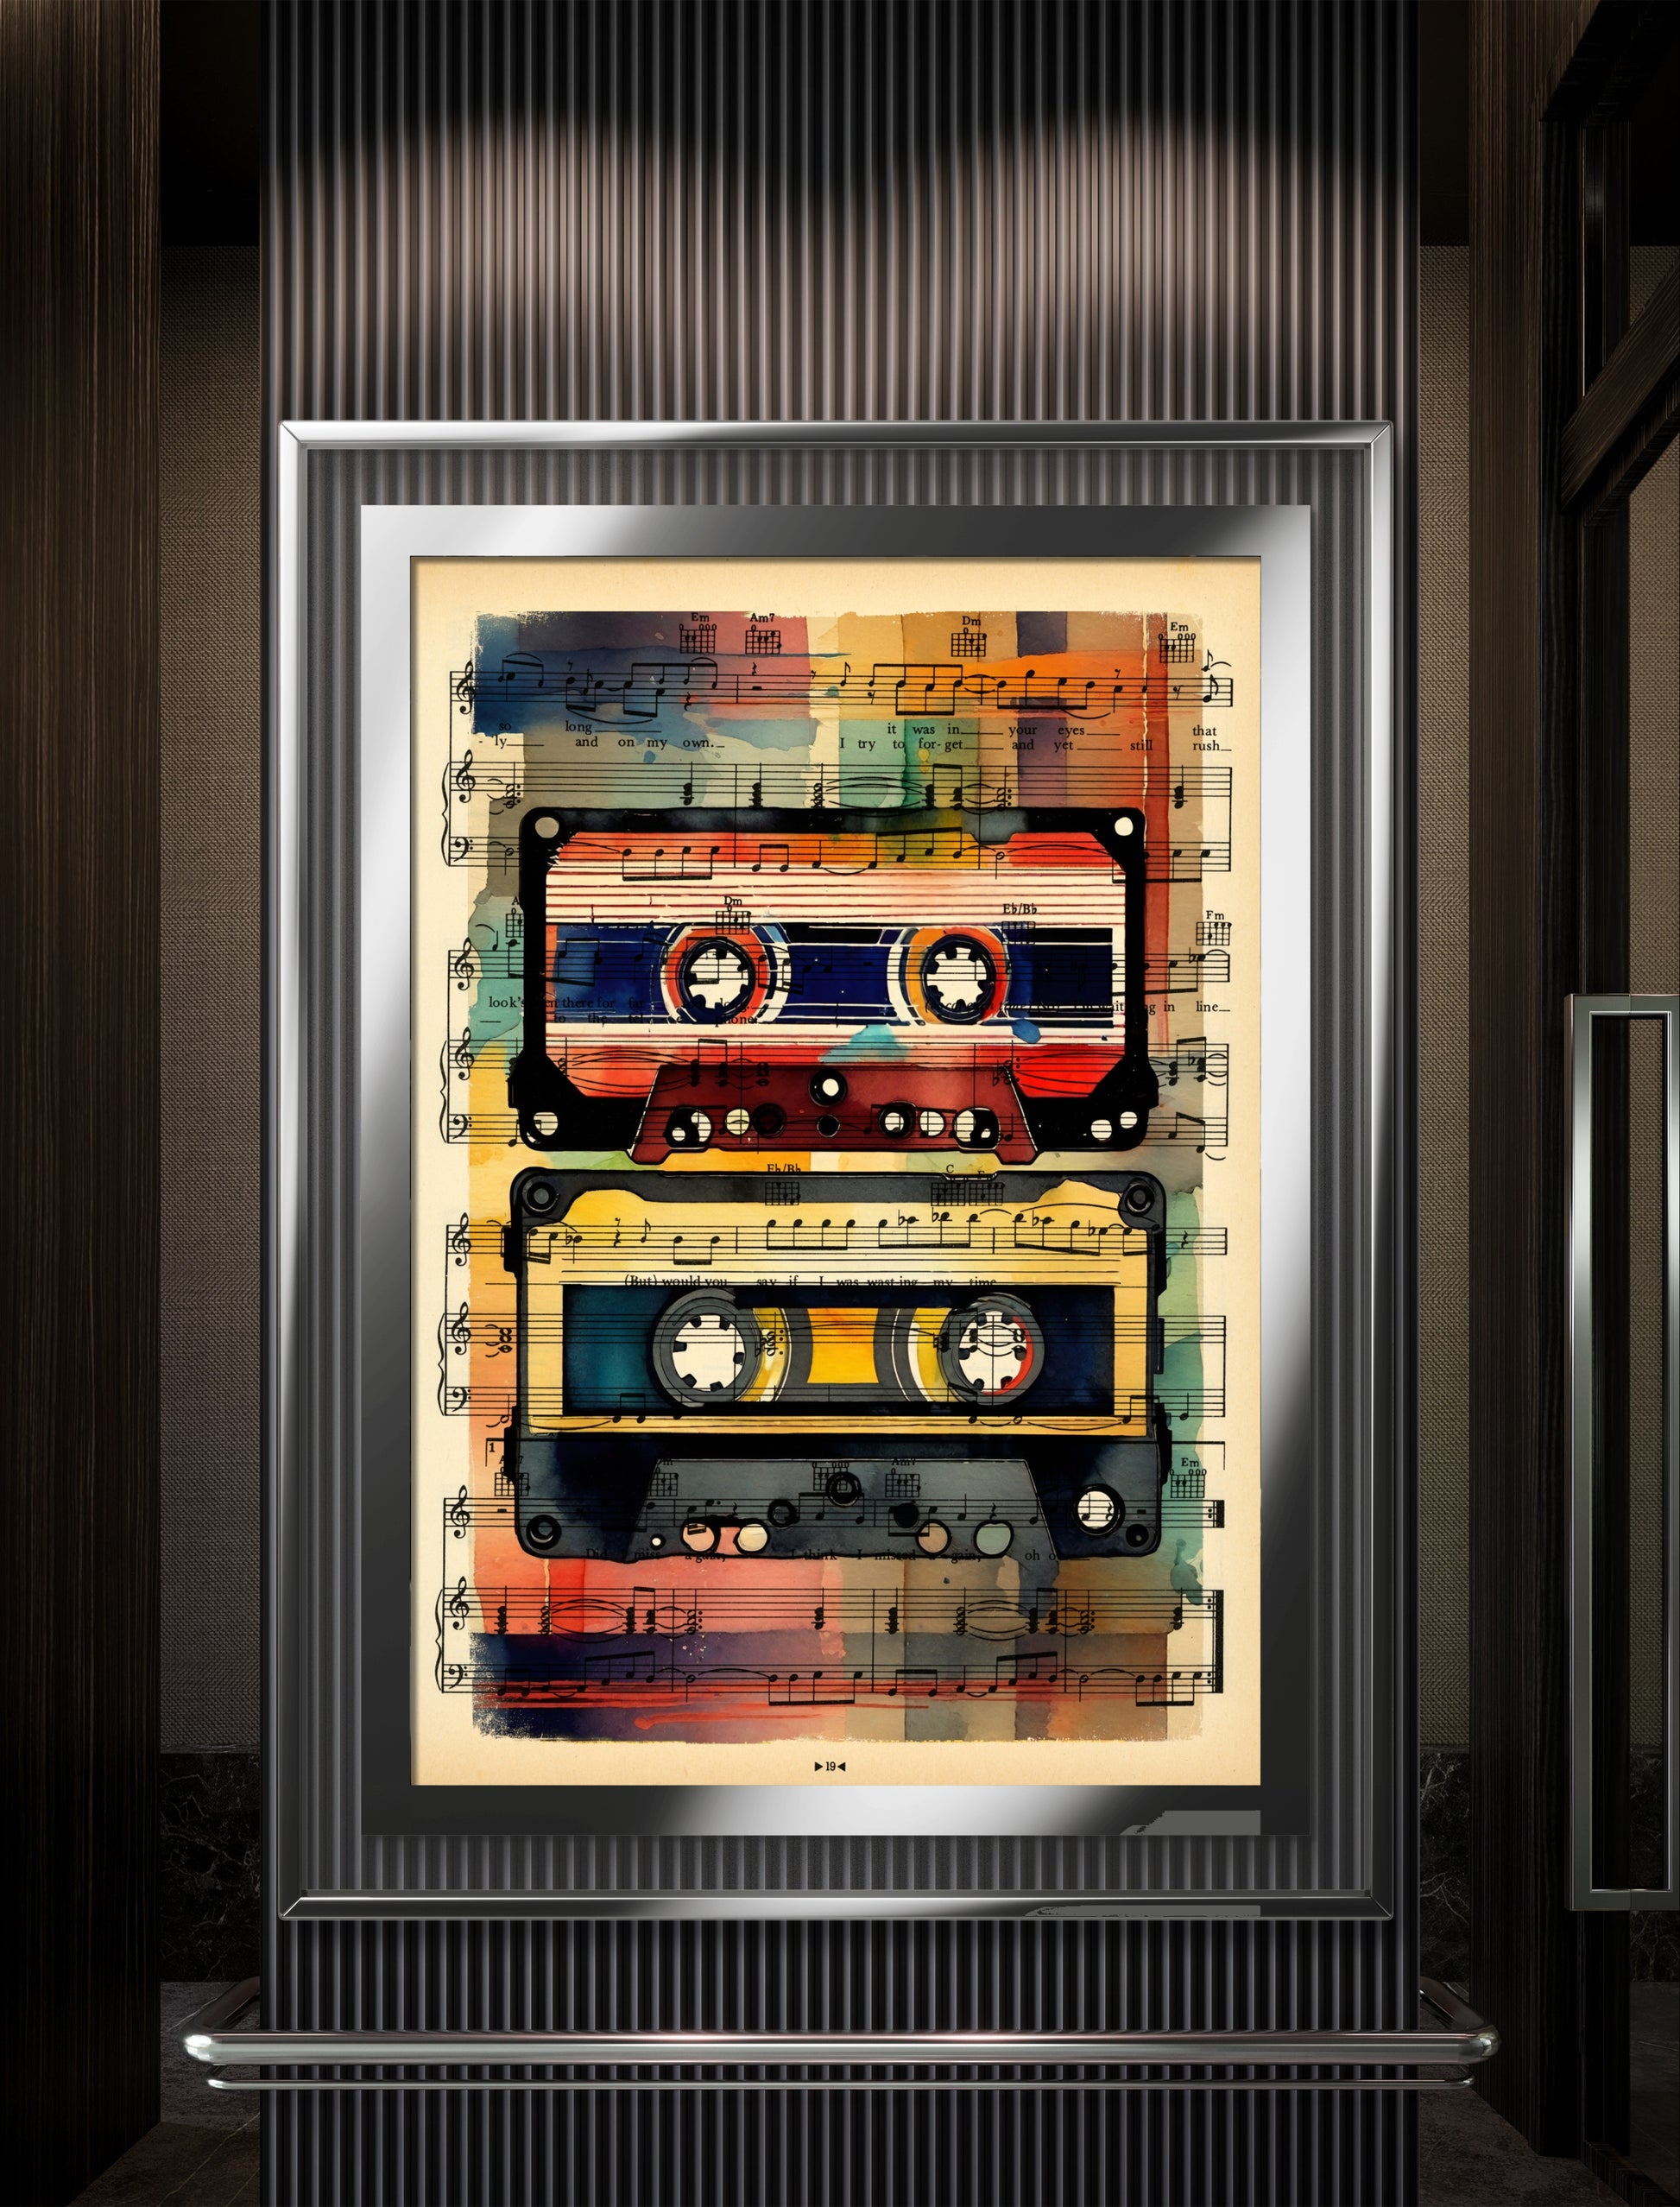 HiFi Retro Audio MixTape - Your gateway to the retro audio aesthetics of the 80s.